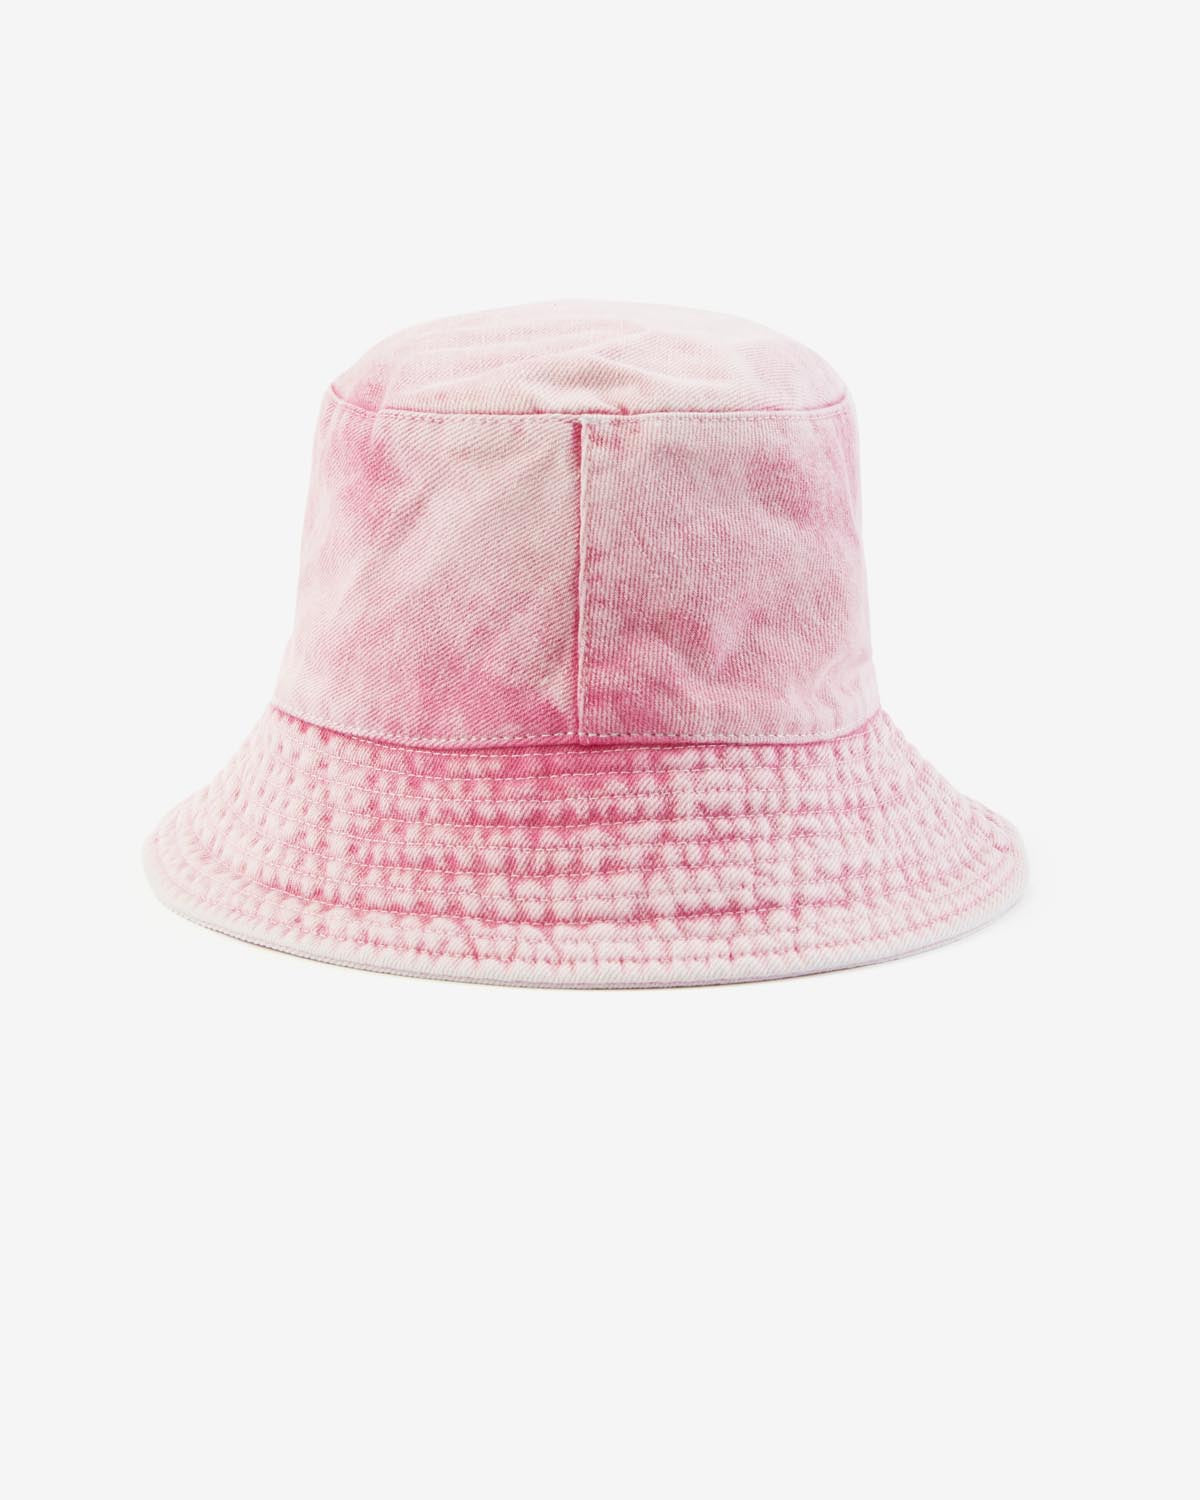 Giorgia cappello Woman Light pink 1